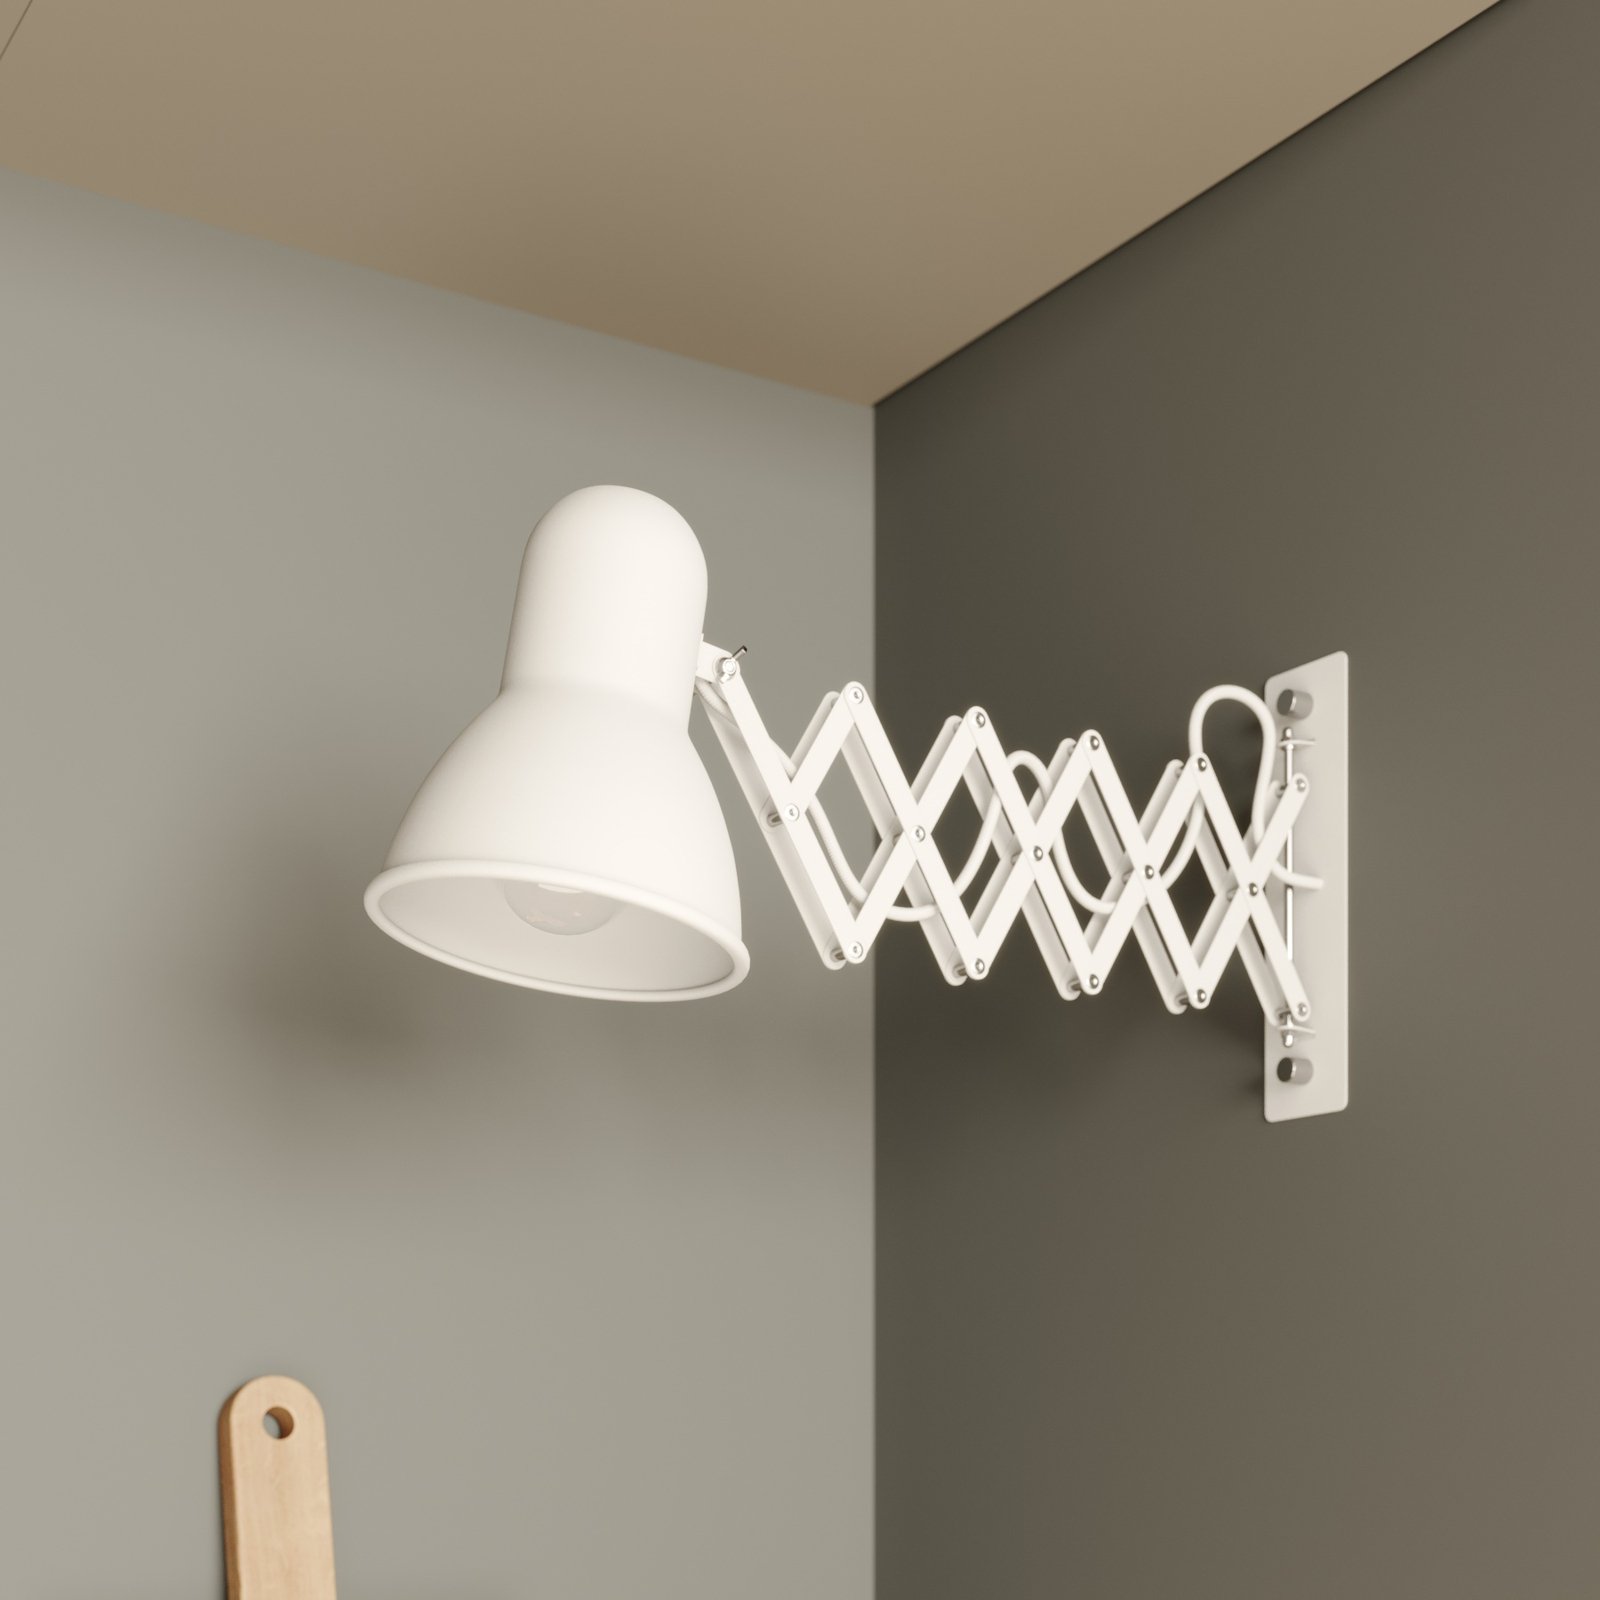 Harmony wall light with scissor arm, white